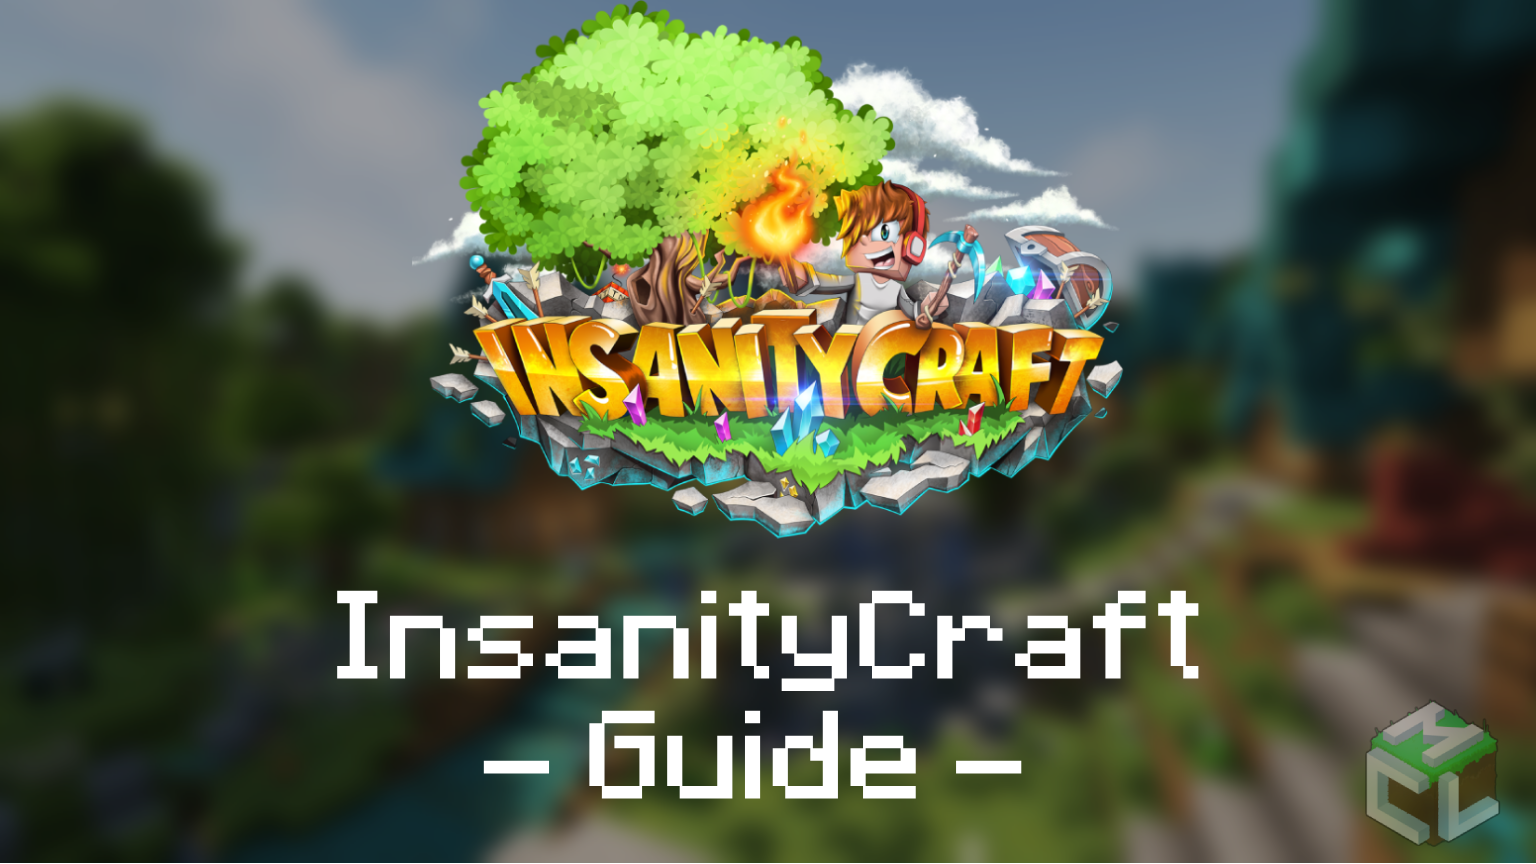 InsanityCraft: a Minecraft multiplayer experience that breaks boundaries